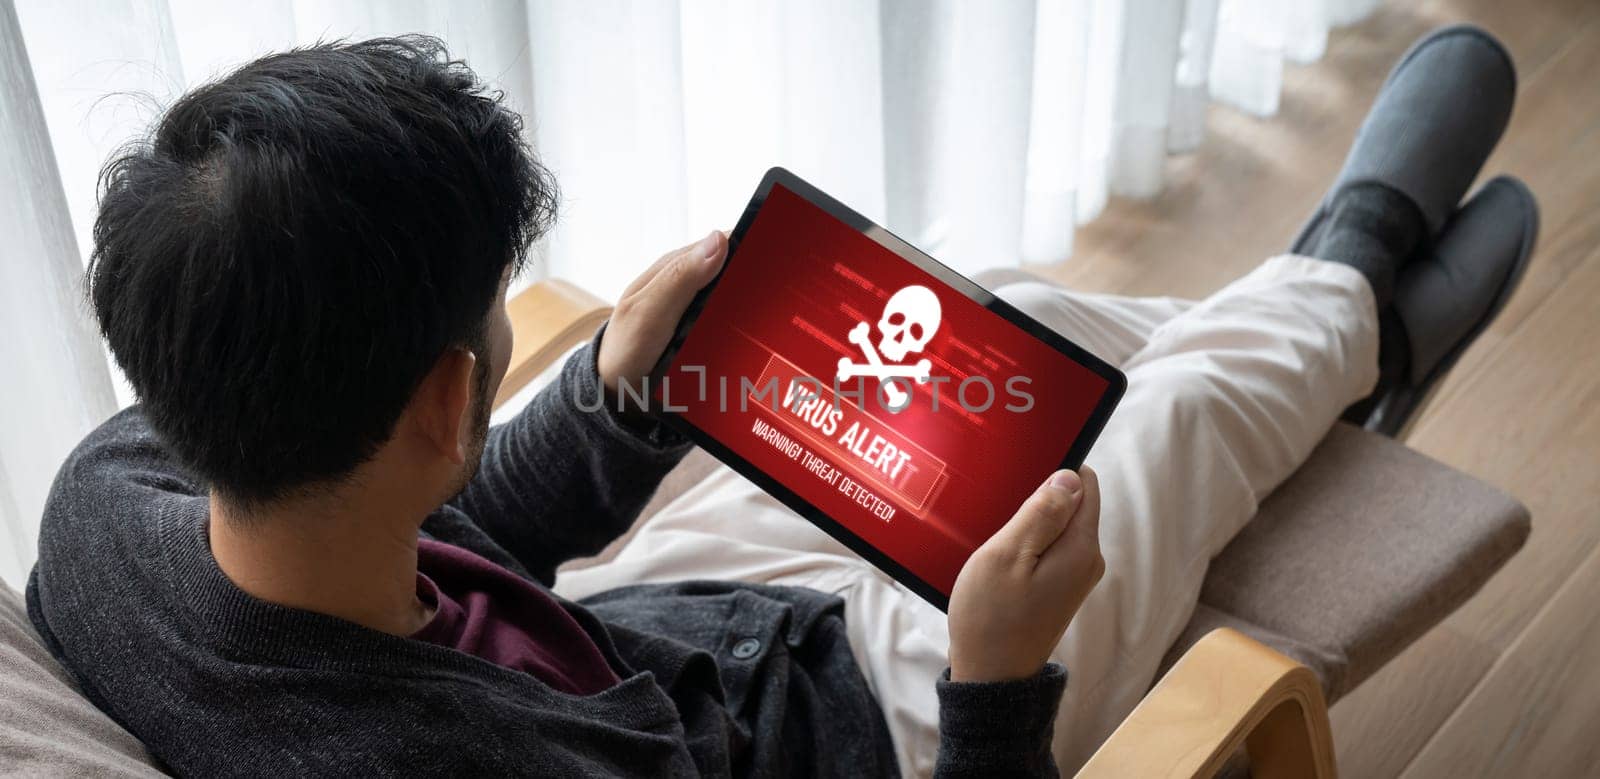 Virus warning alert on computer screen detected modish cyber threat , hacker, computer virus and malware